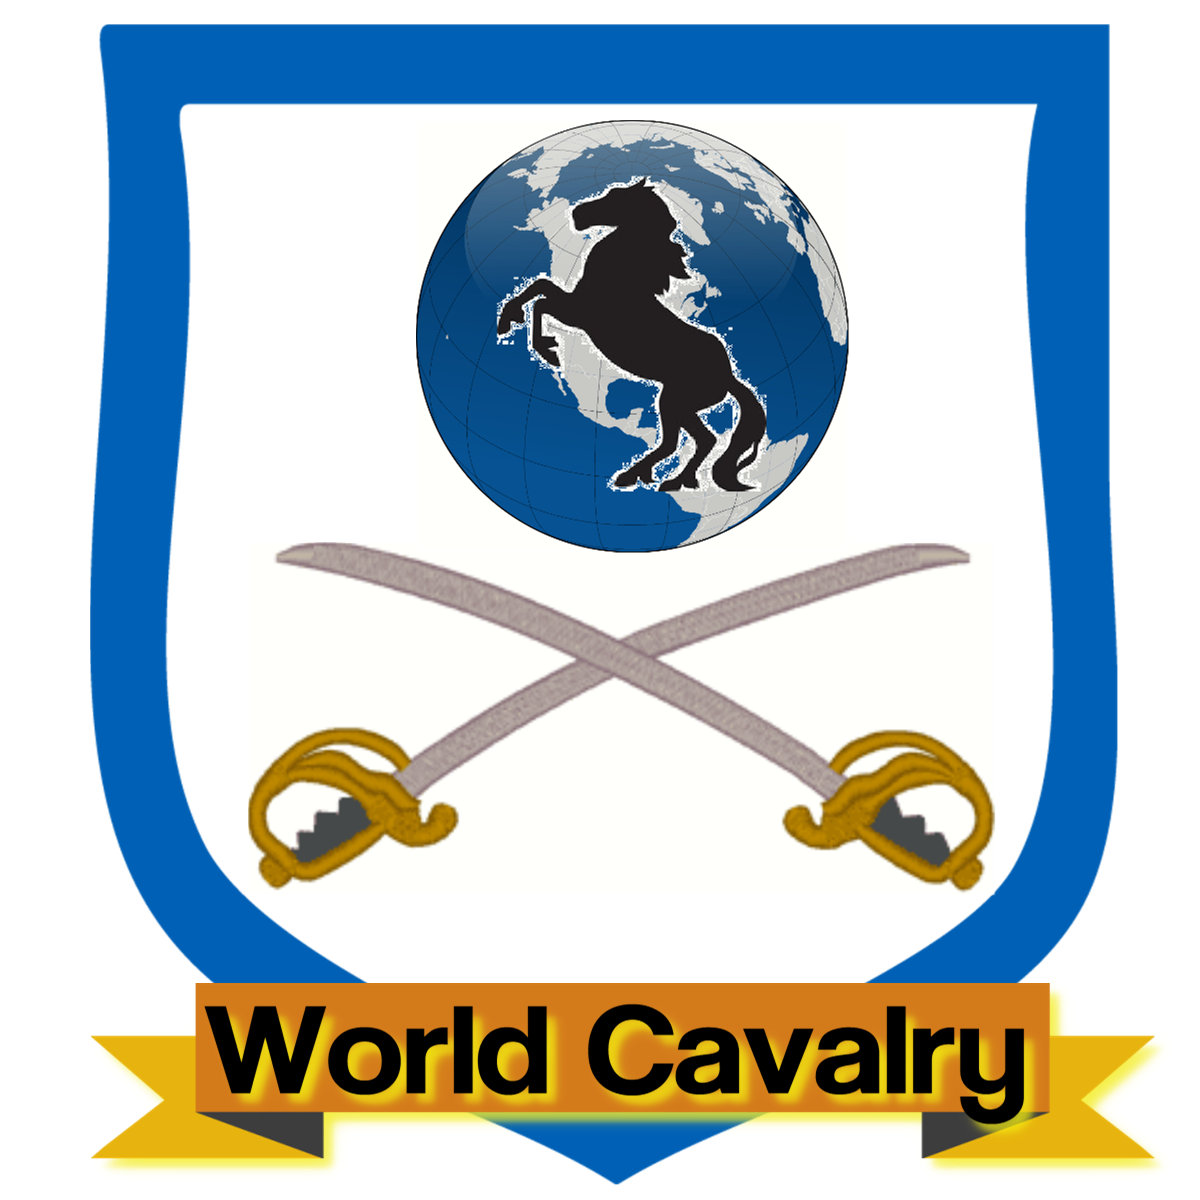 World Cavalry on Facebook